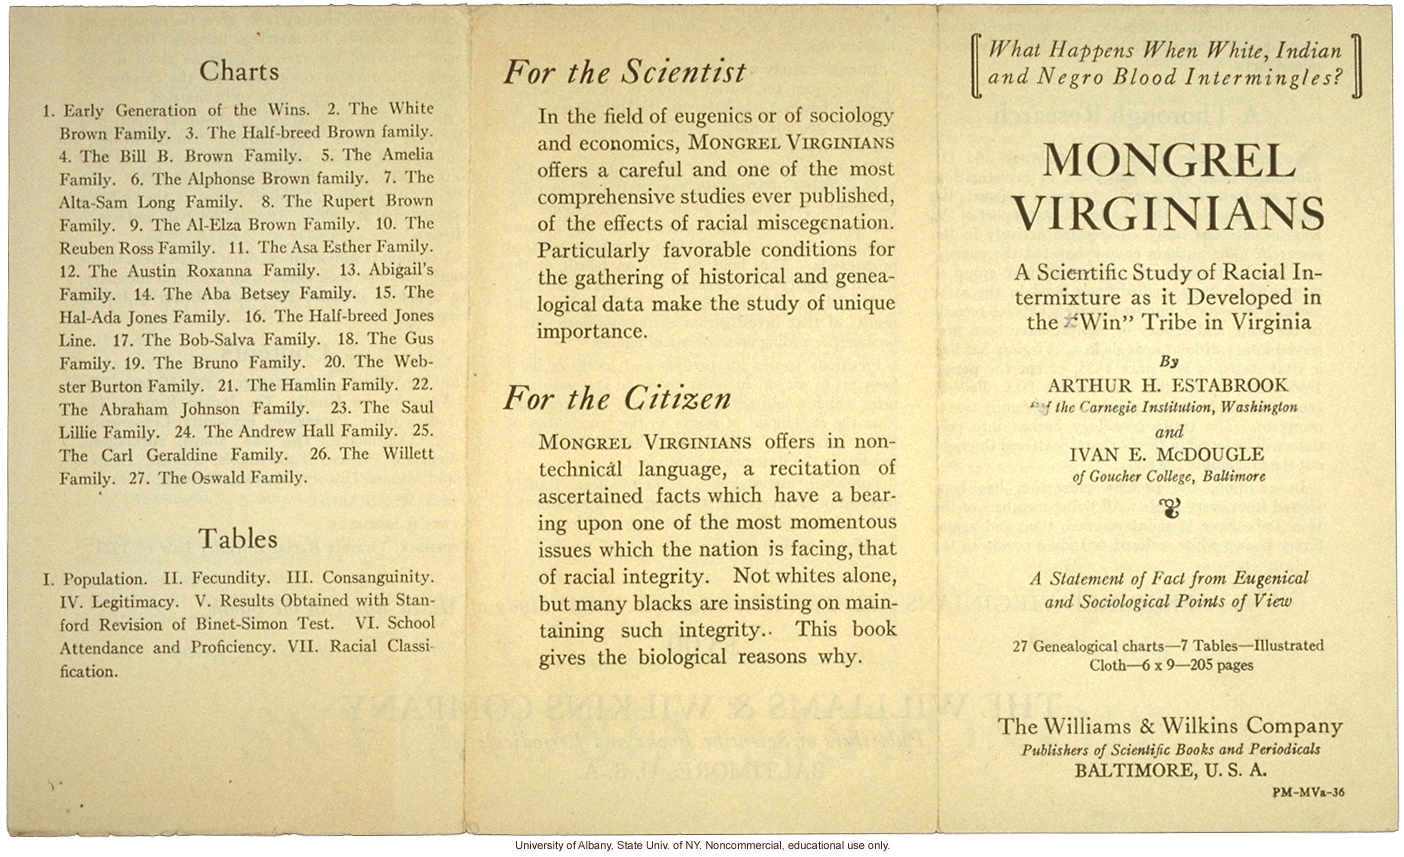 Brochure advertising <i>Mongrel Virginians</i>, by Arthur H. Estabrook and Ivan E. McDougle